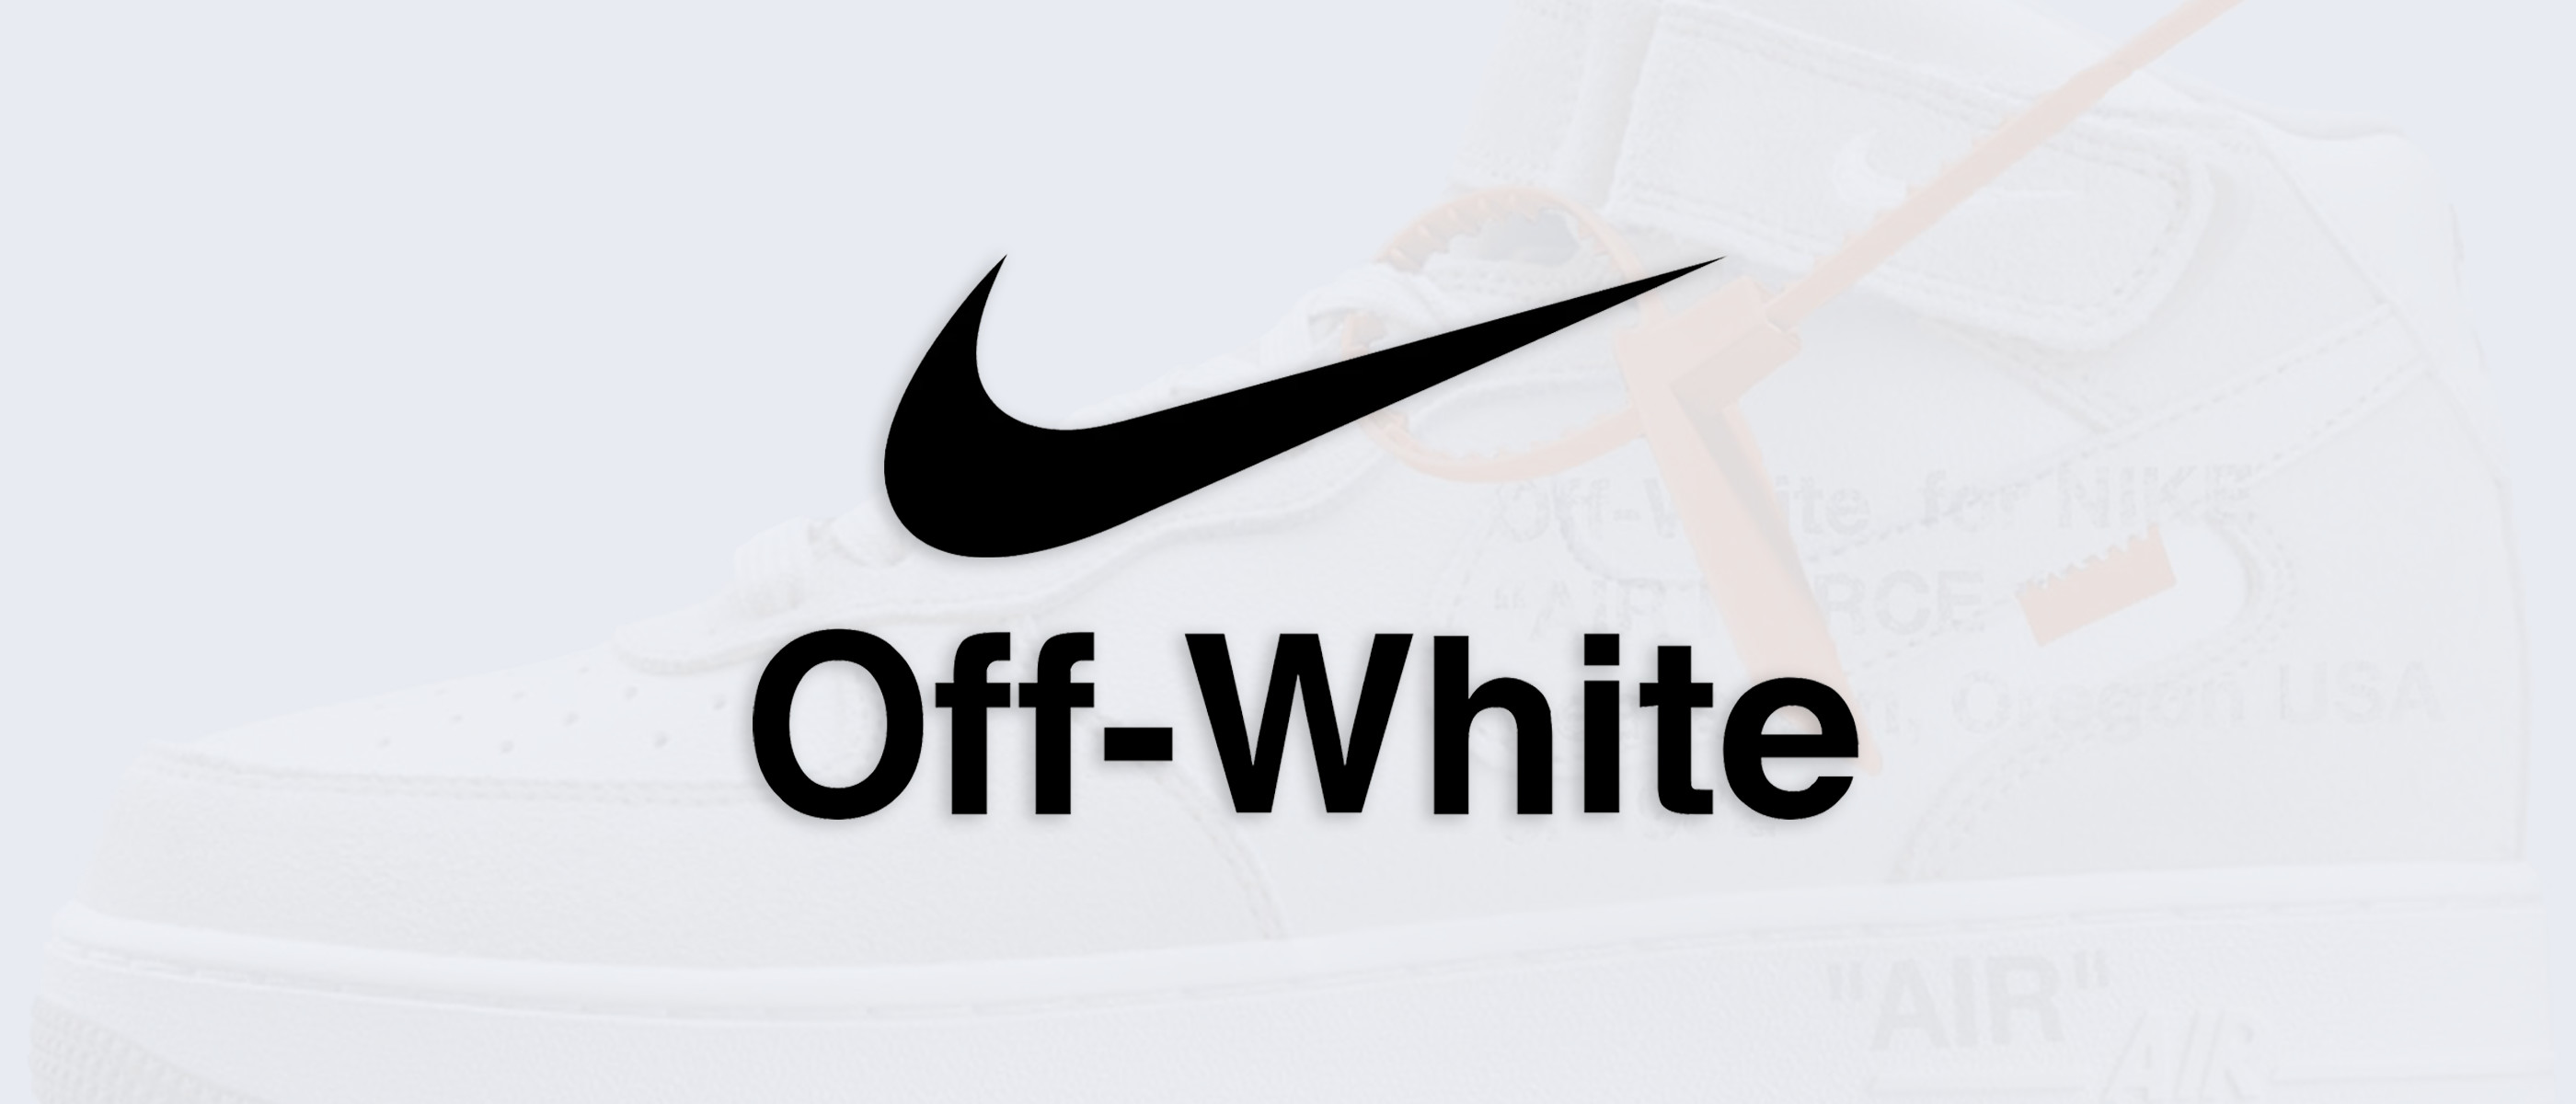 Leak Alert! Off-White x Nike Air Force 1 Mid is Coming Soon